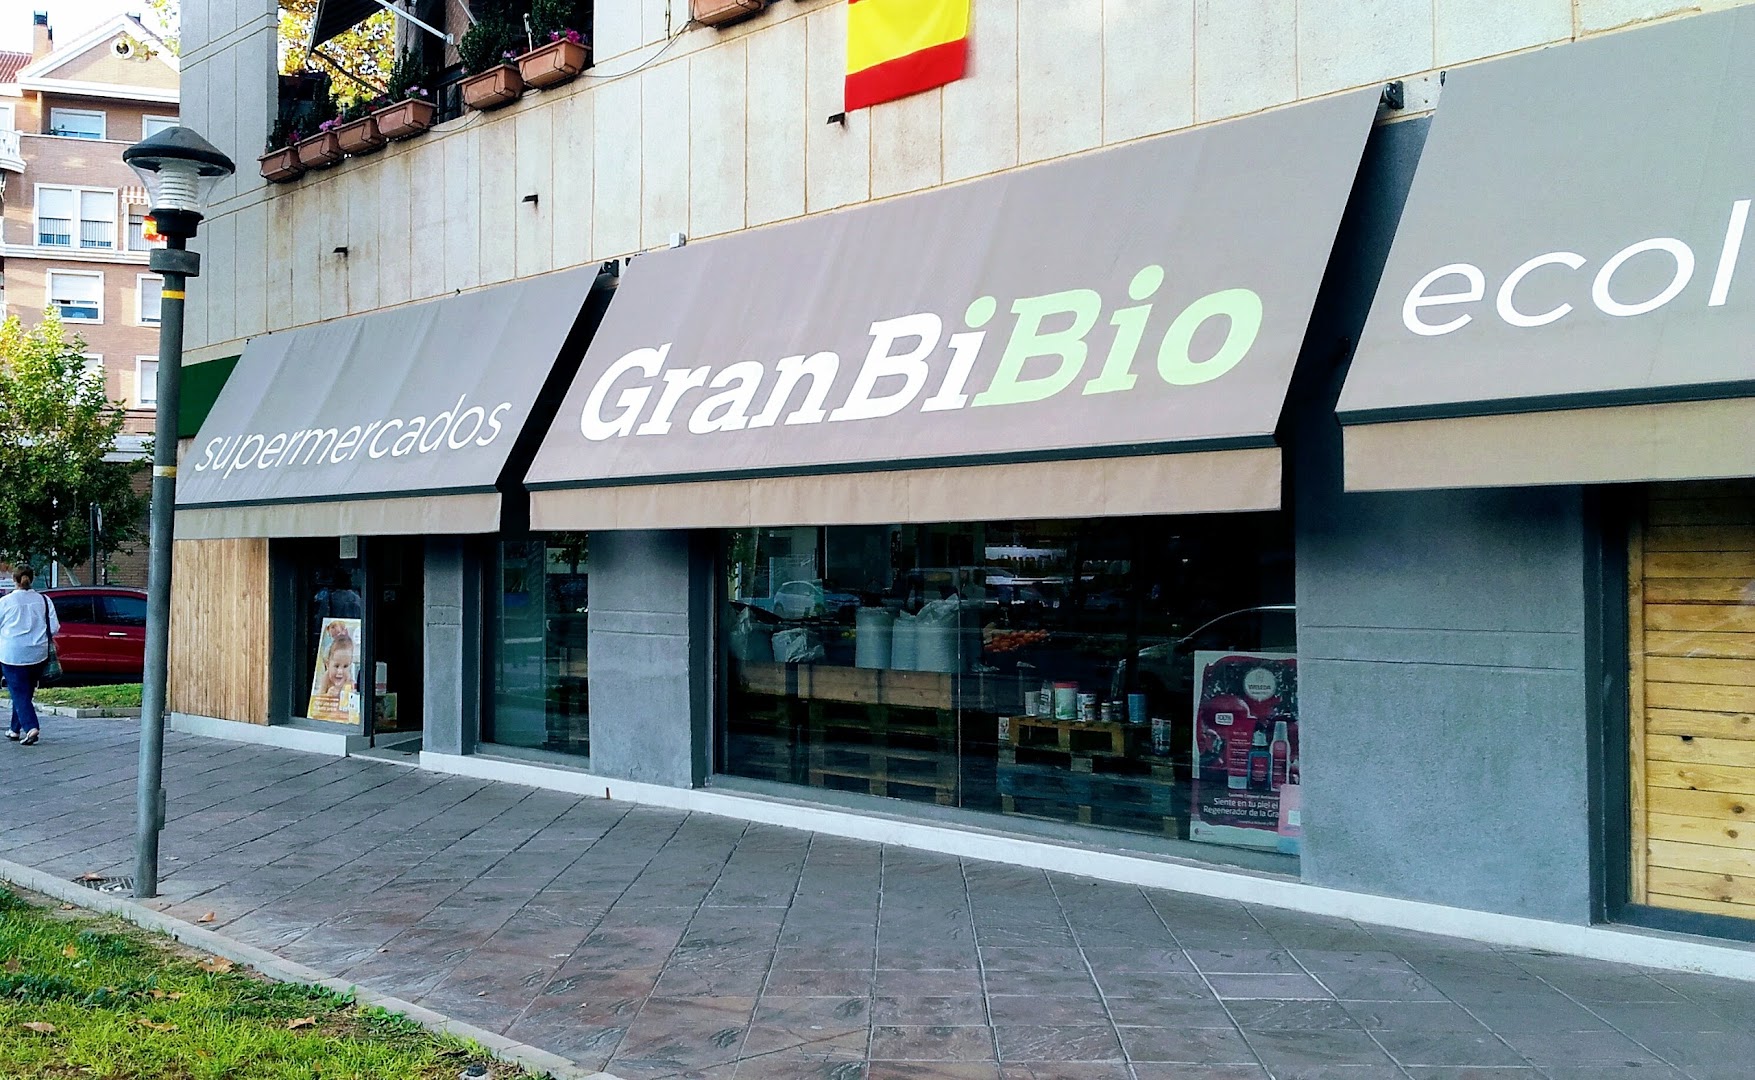 GranBiBio Supermercados ecológicos